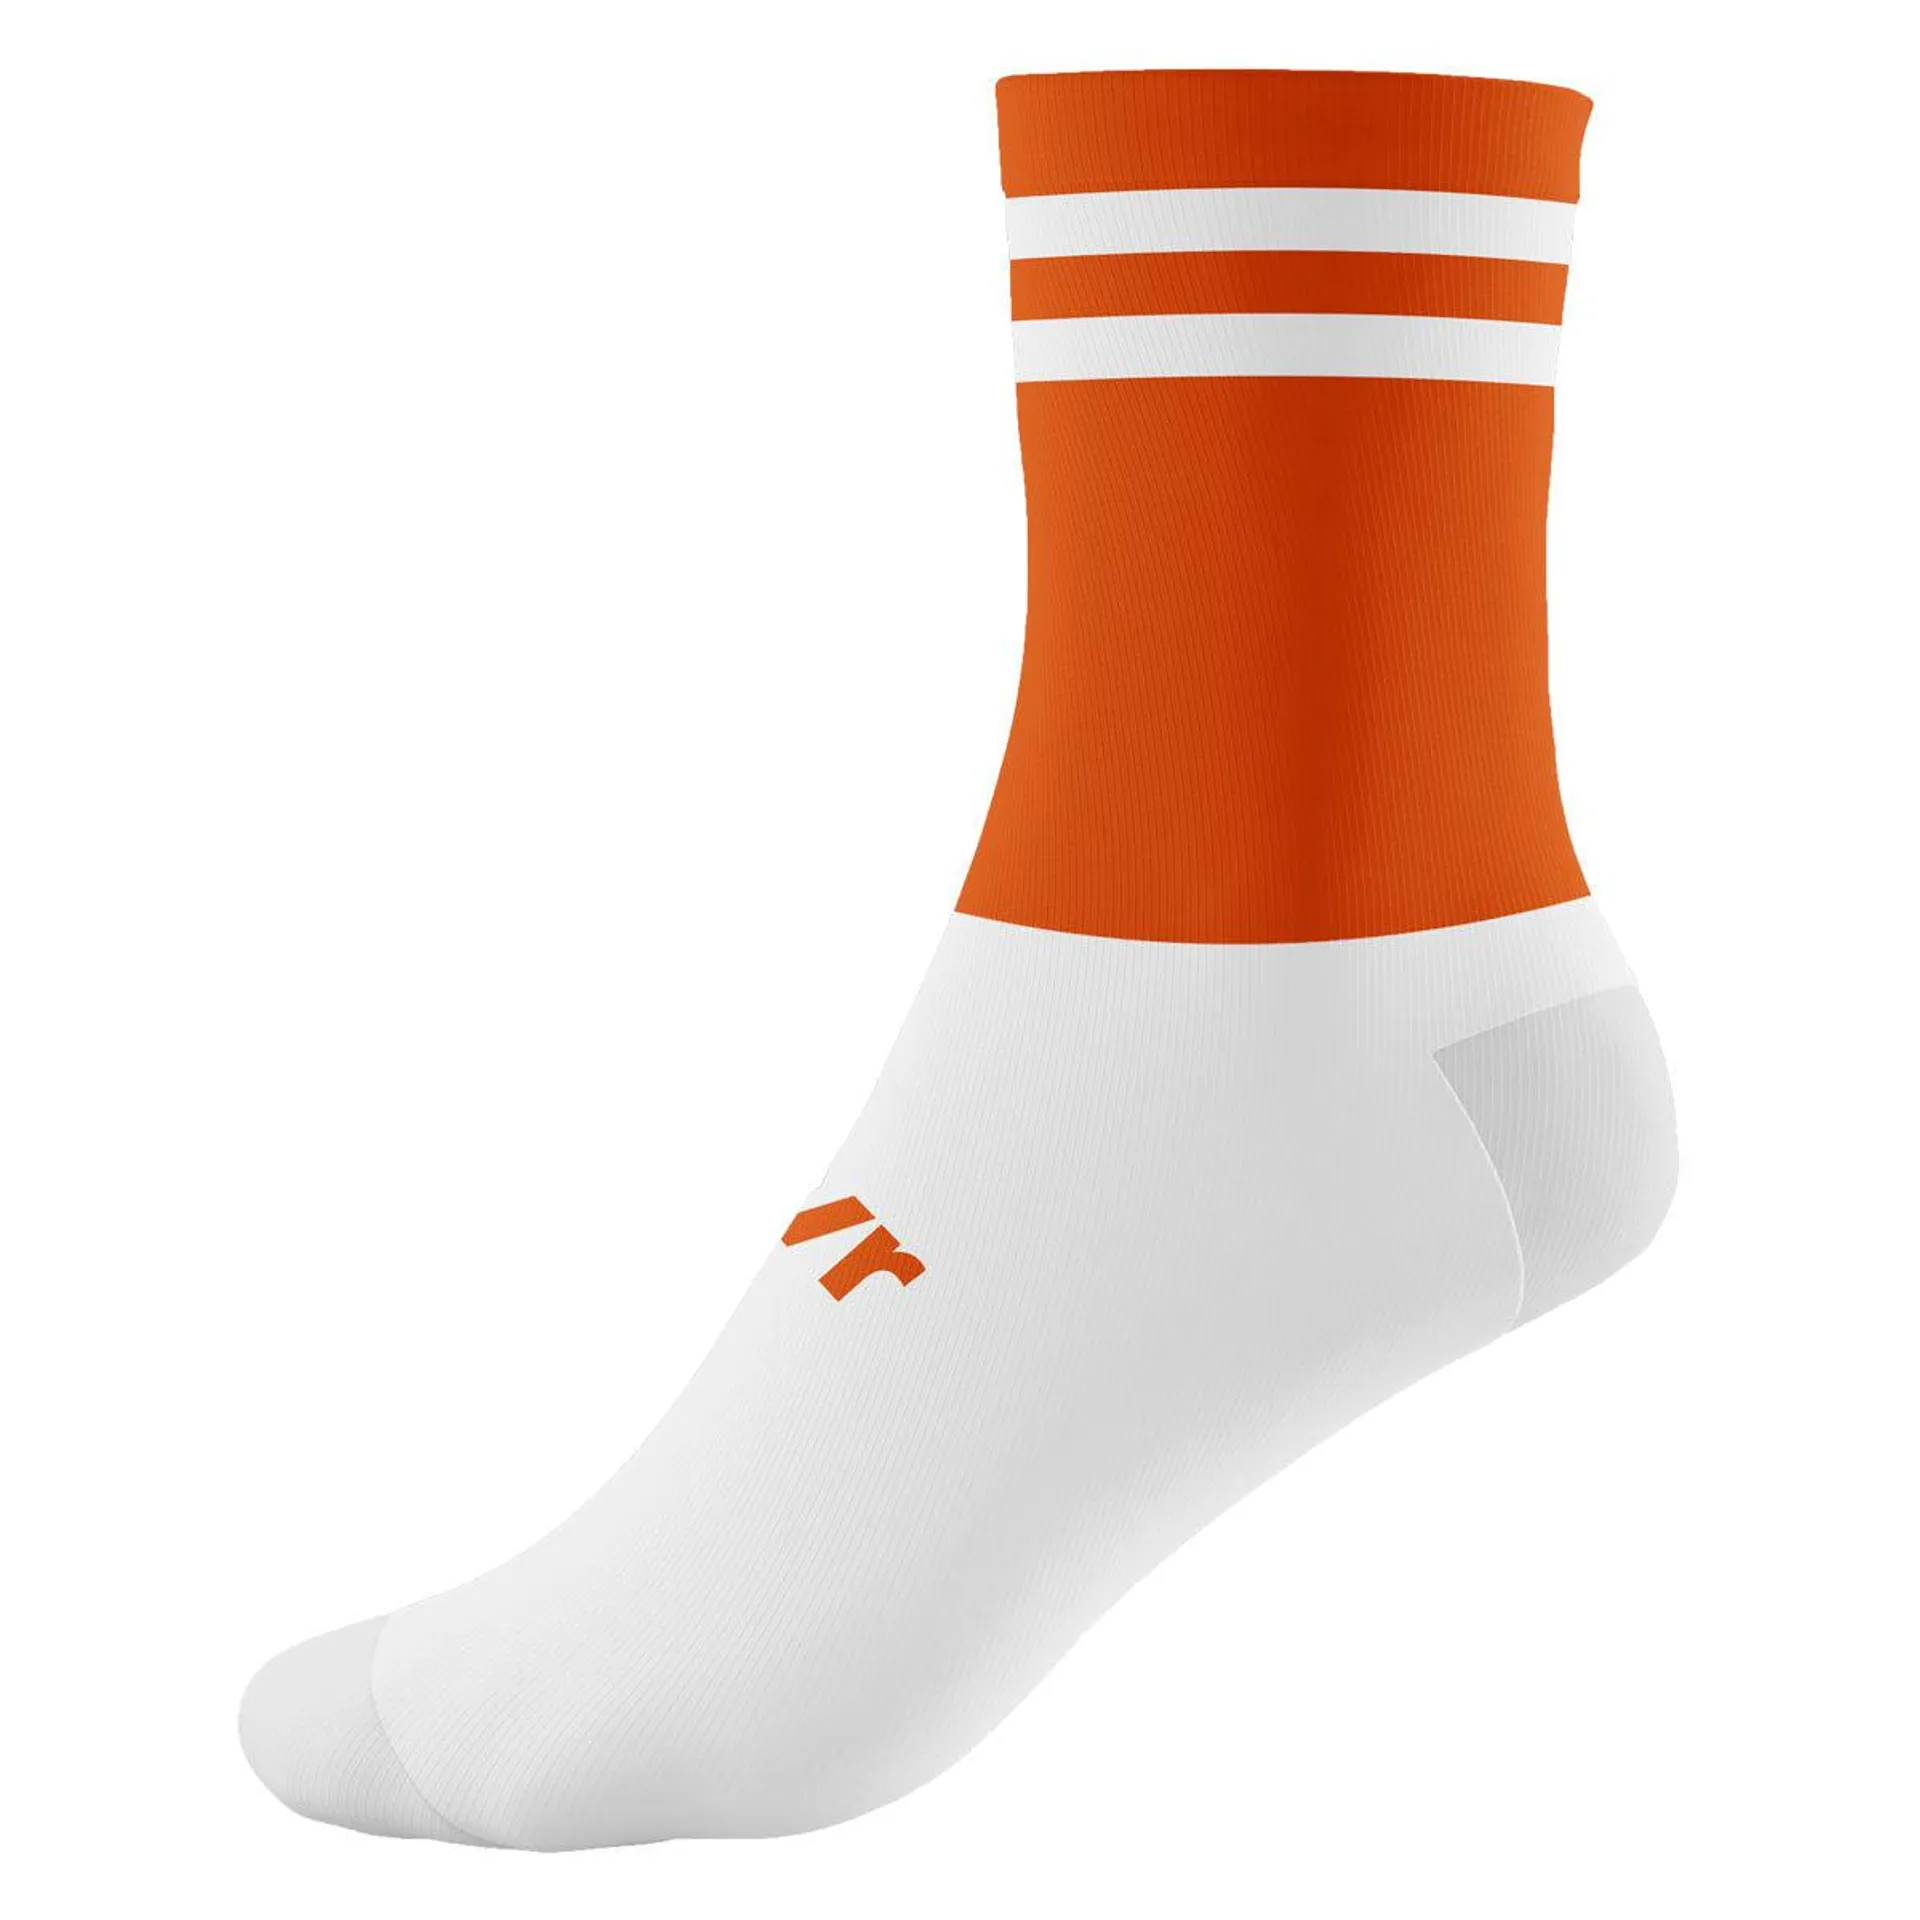 Mc Keever Pro Mid 2 Bar Socks - Youth - Orange/White